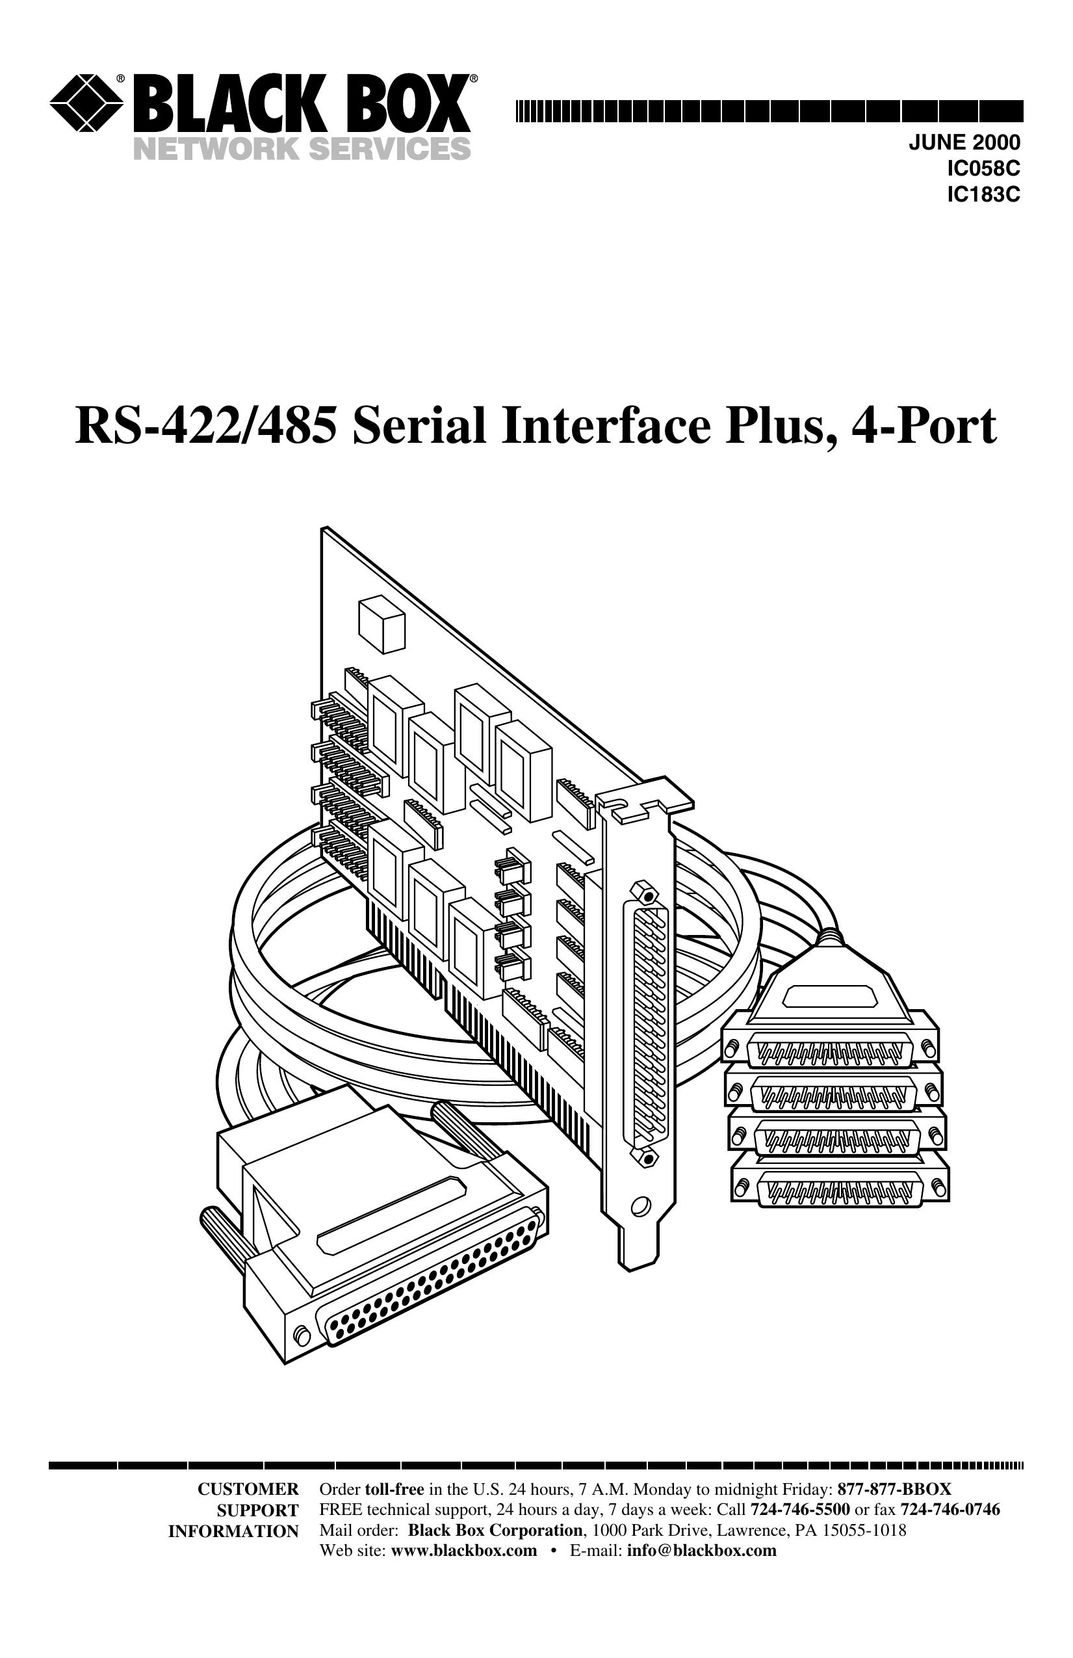 Black Box IC183C Network Card User Manual